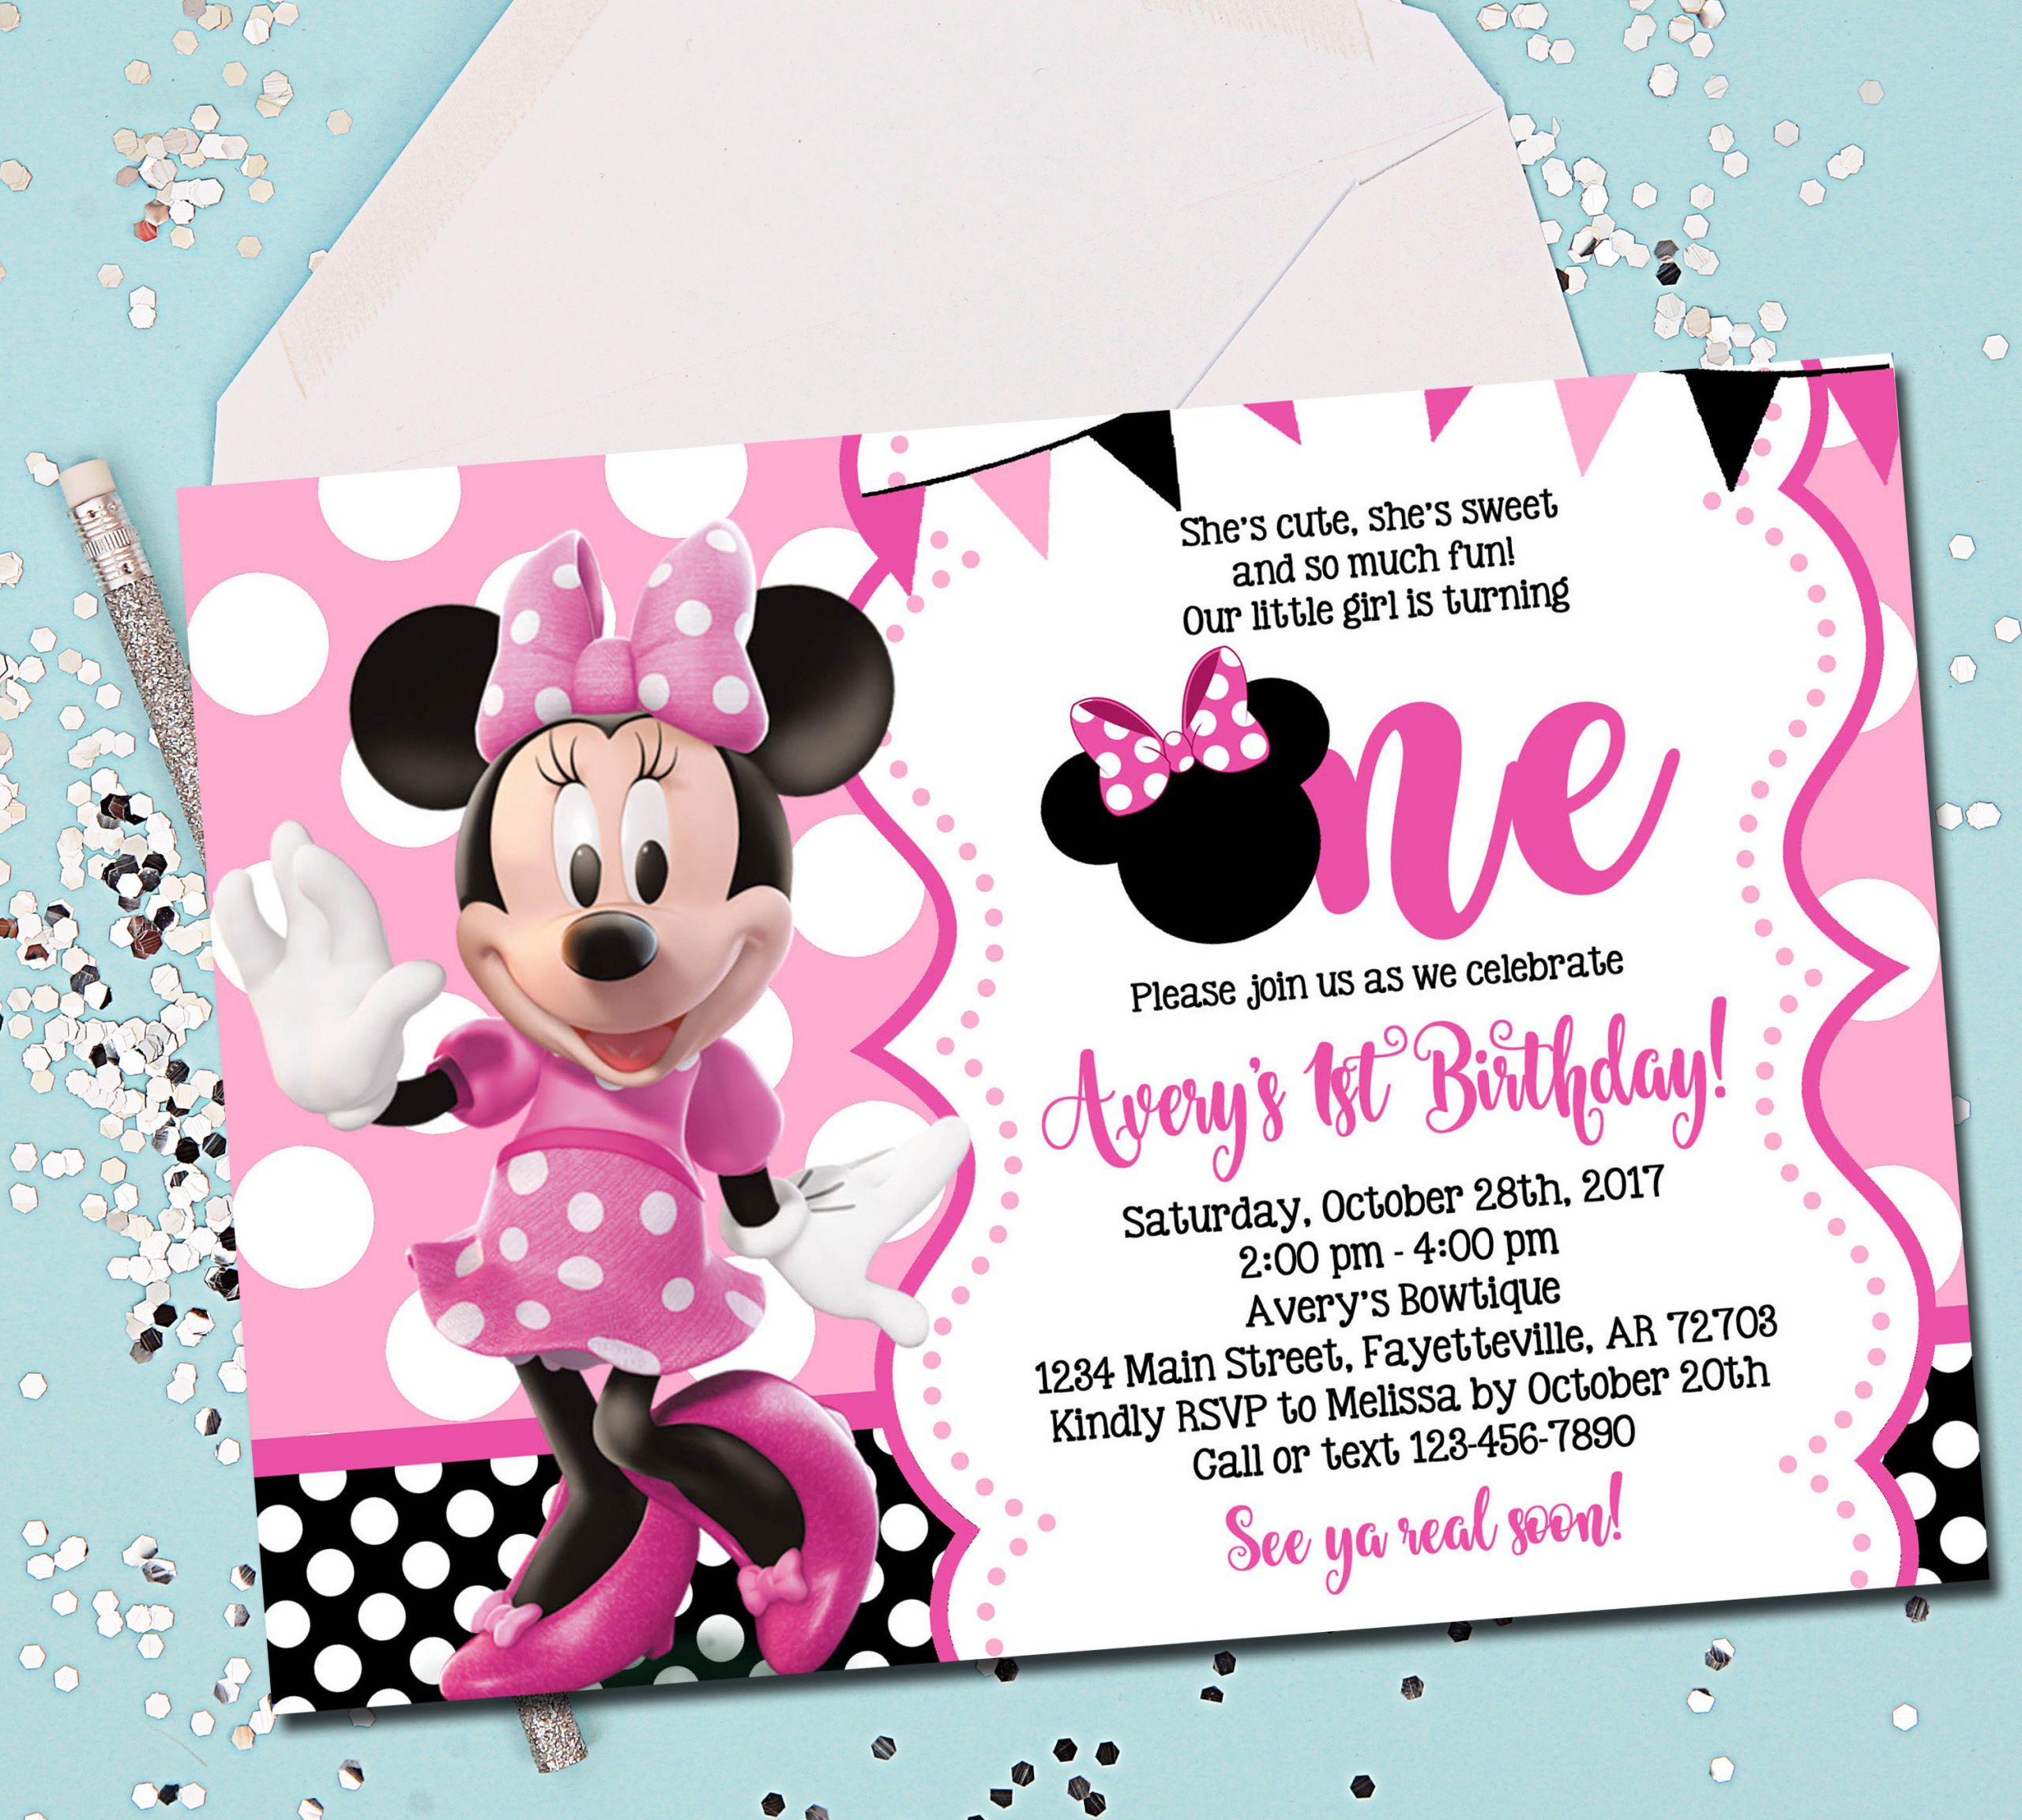 Printable Minnie Mouse Birthday Invitations
 MINNIE MOUSE INVITATION Minnie Mouse Birthday Invitation